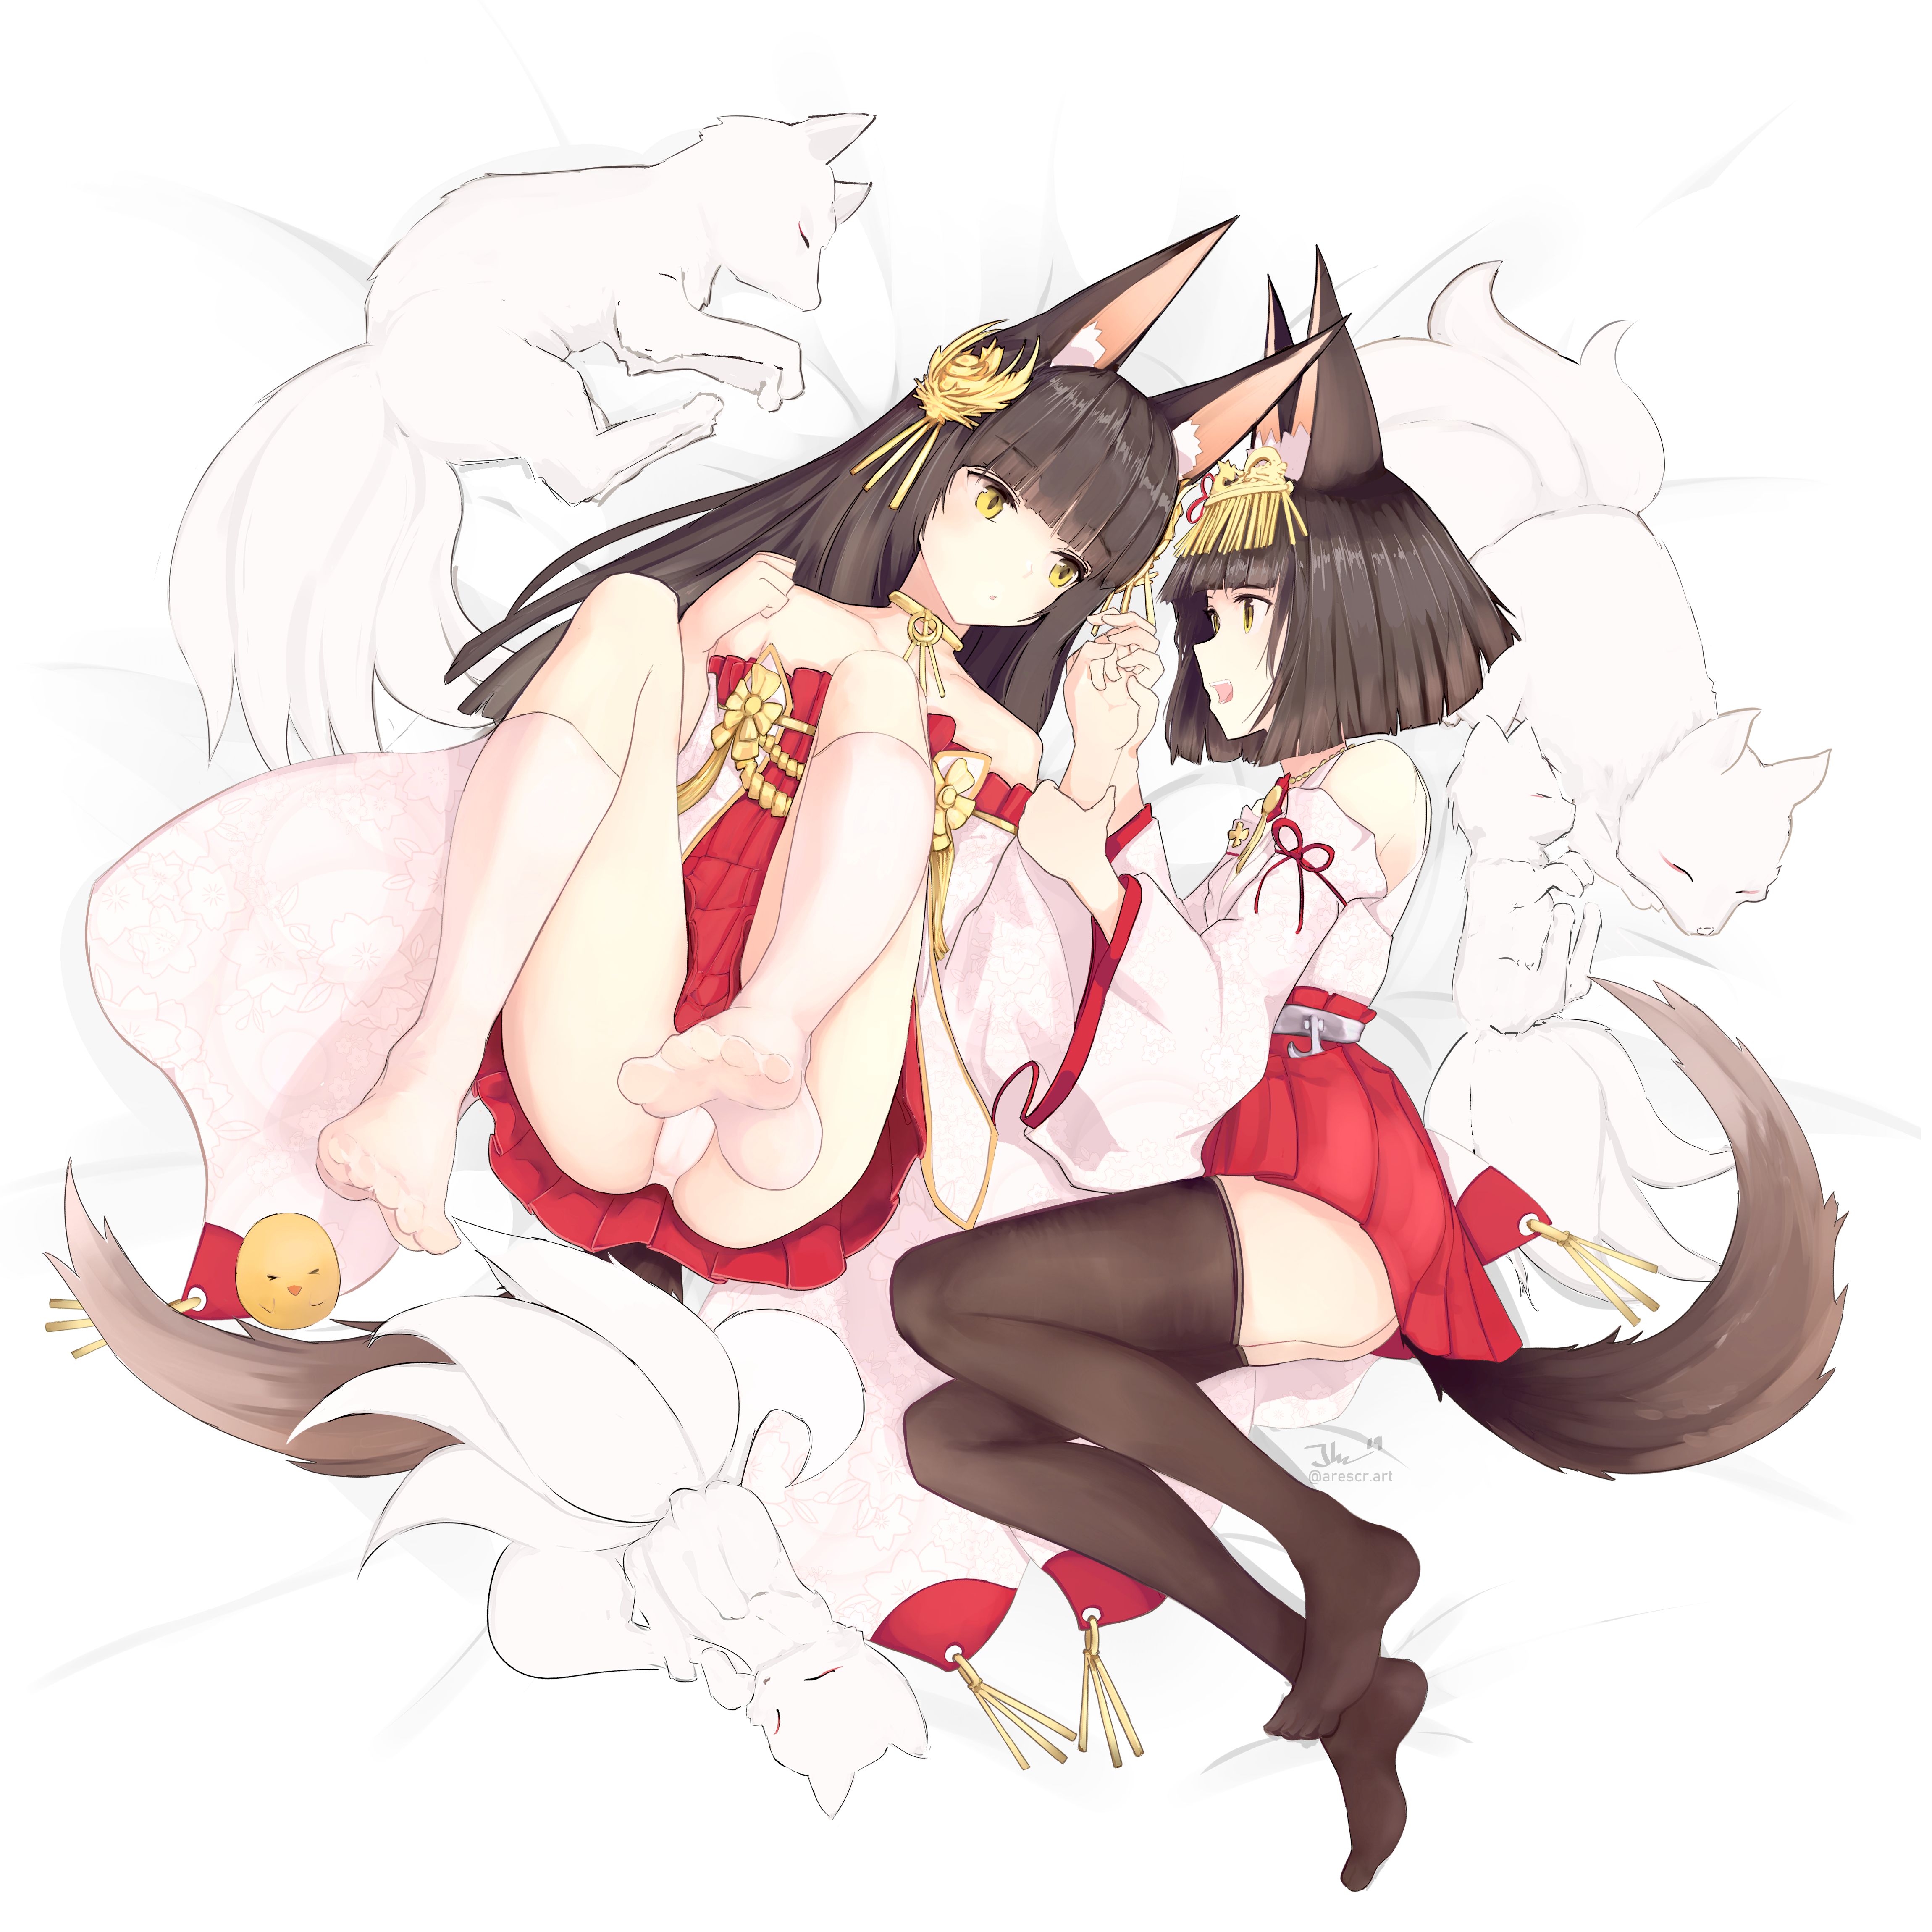 【Mutsu-chan (Azulen)】Secondary erotic image of Azur Lane's black-haired short heavy cherry blossom loli priestess sister ship Mutsu-chan 31